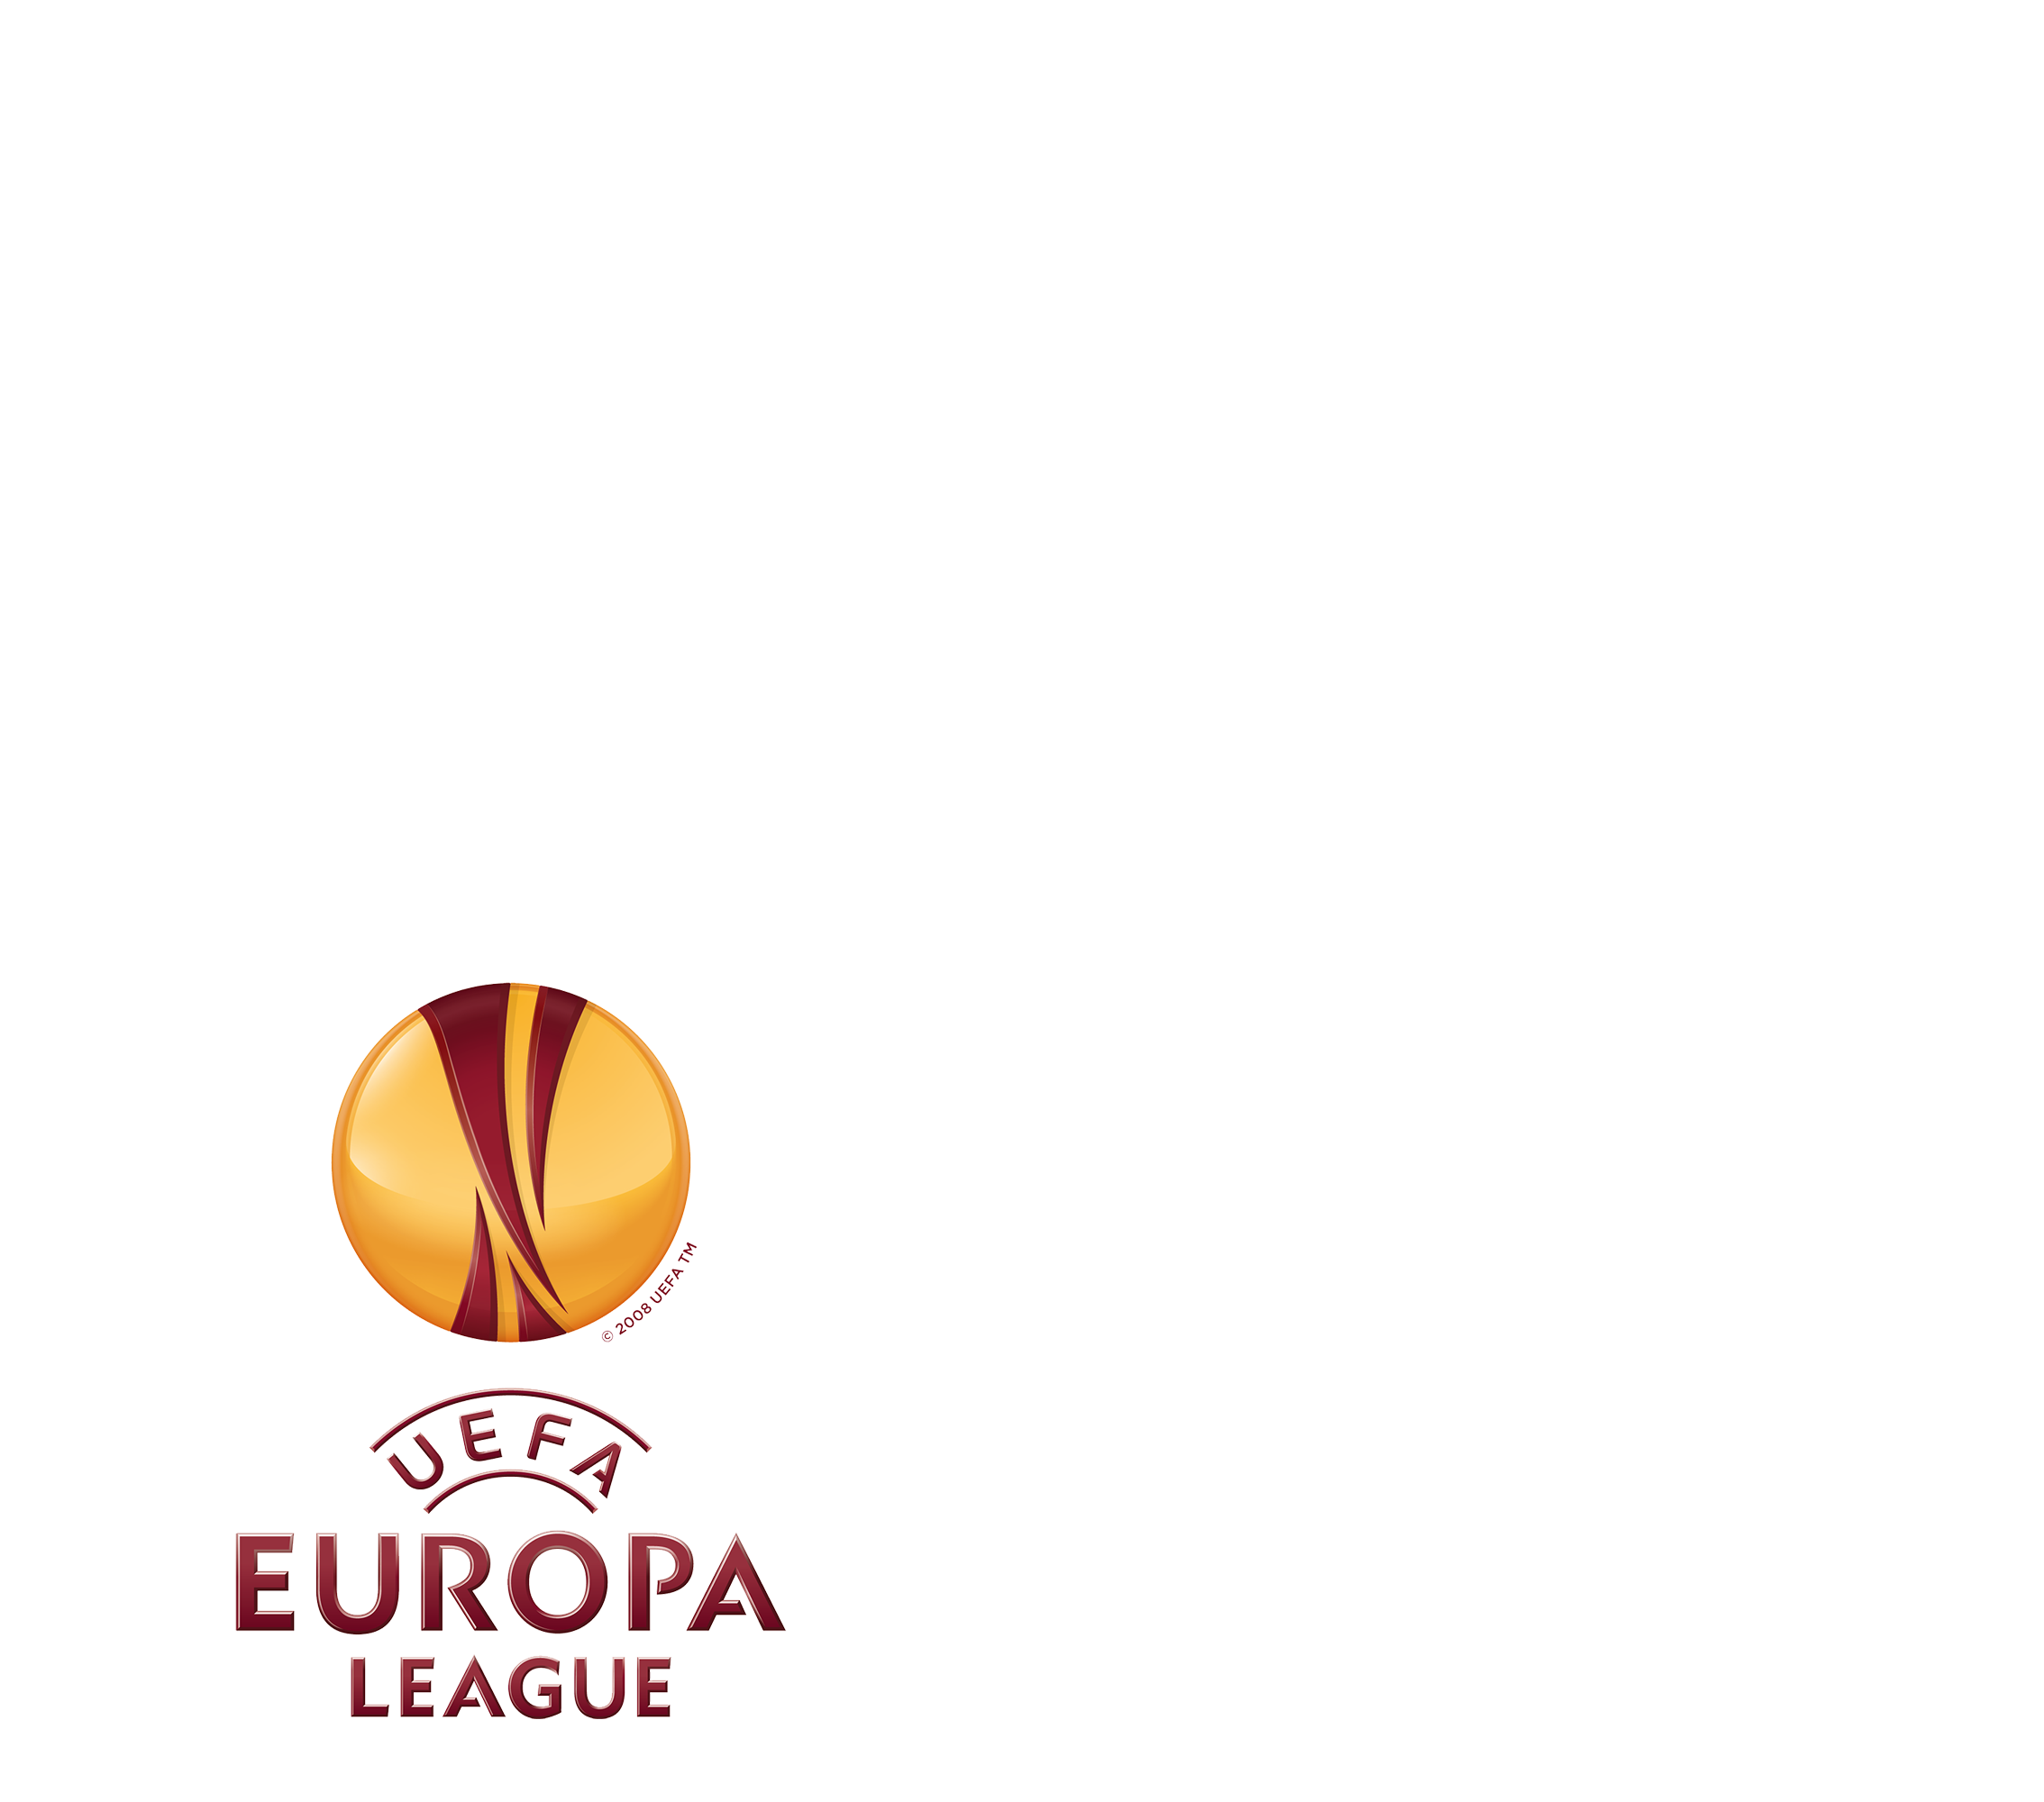 Europa League 2019/20